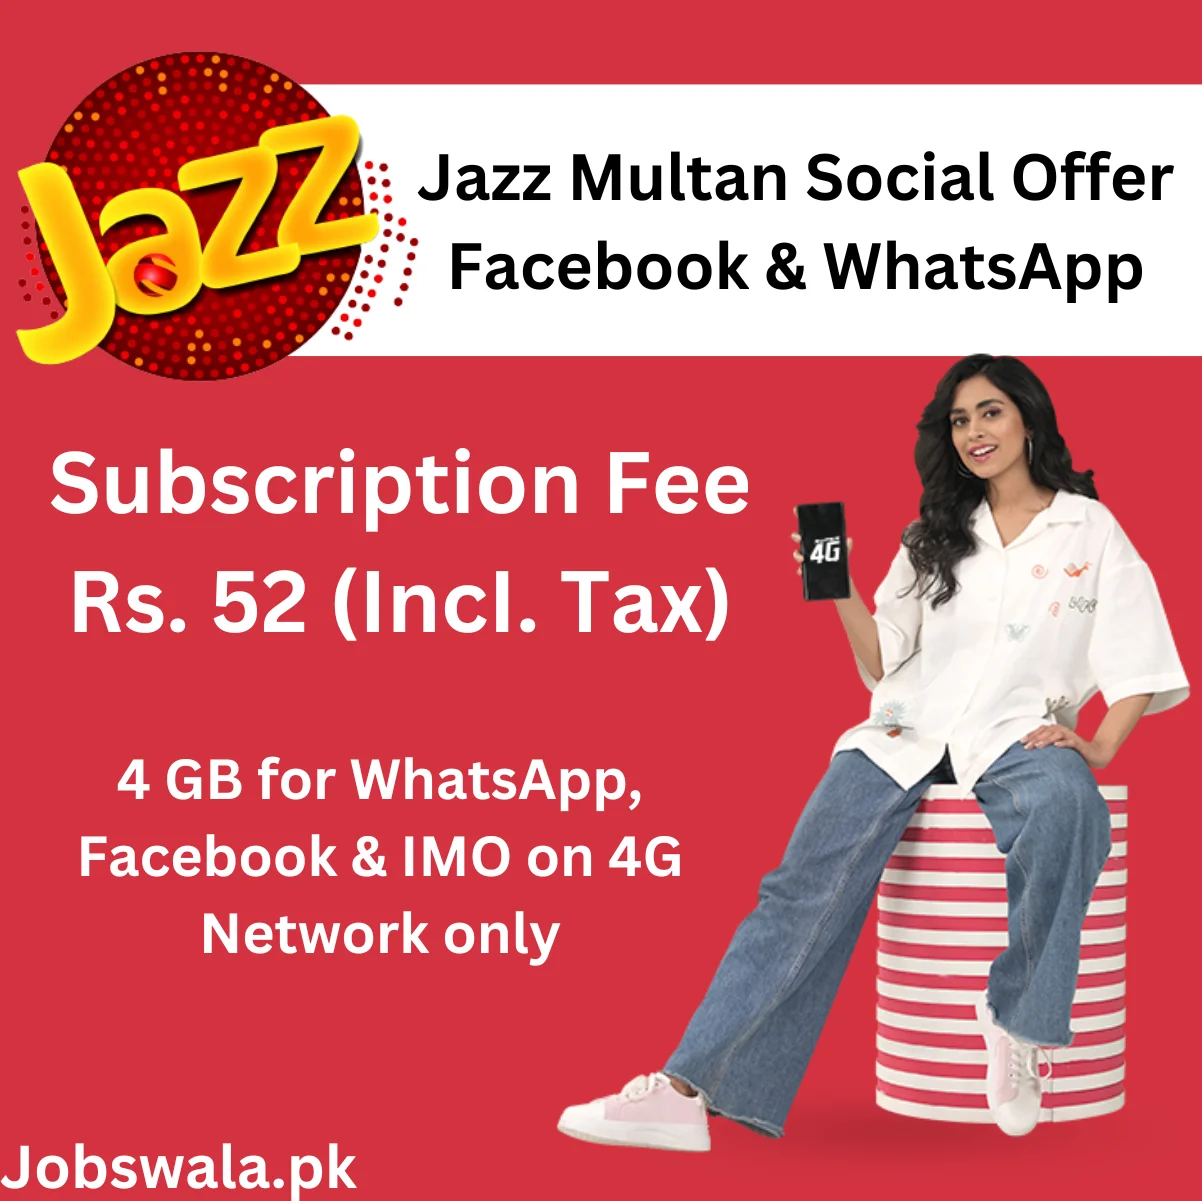 Jazz Multan Social Offer Facebook & WhatsApp